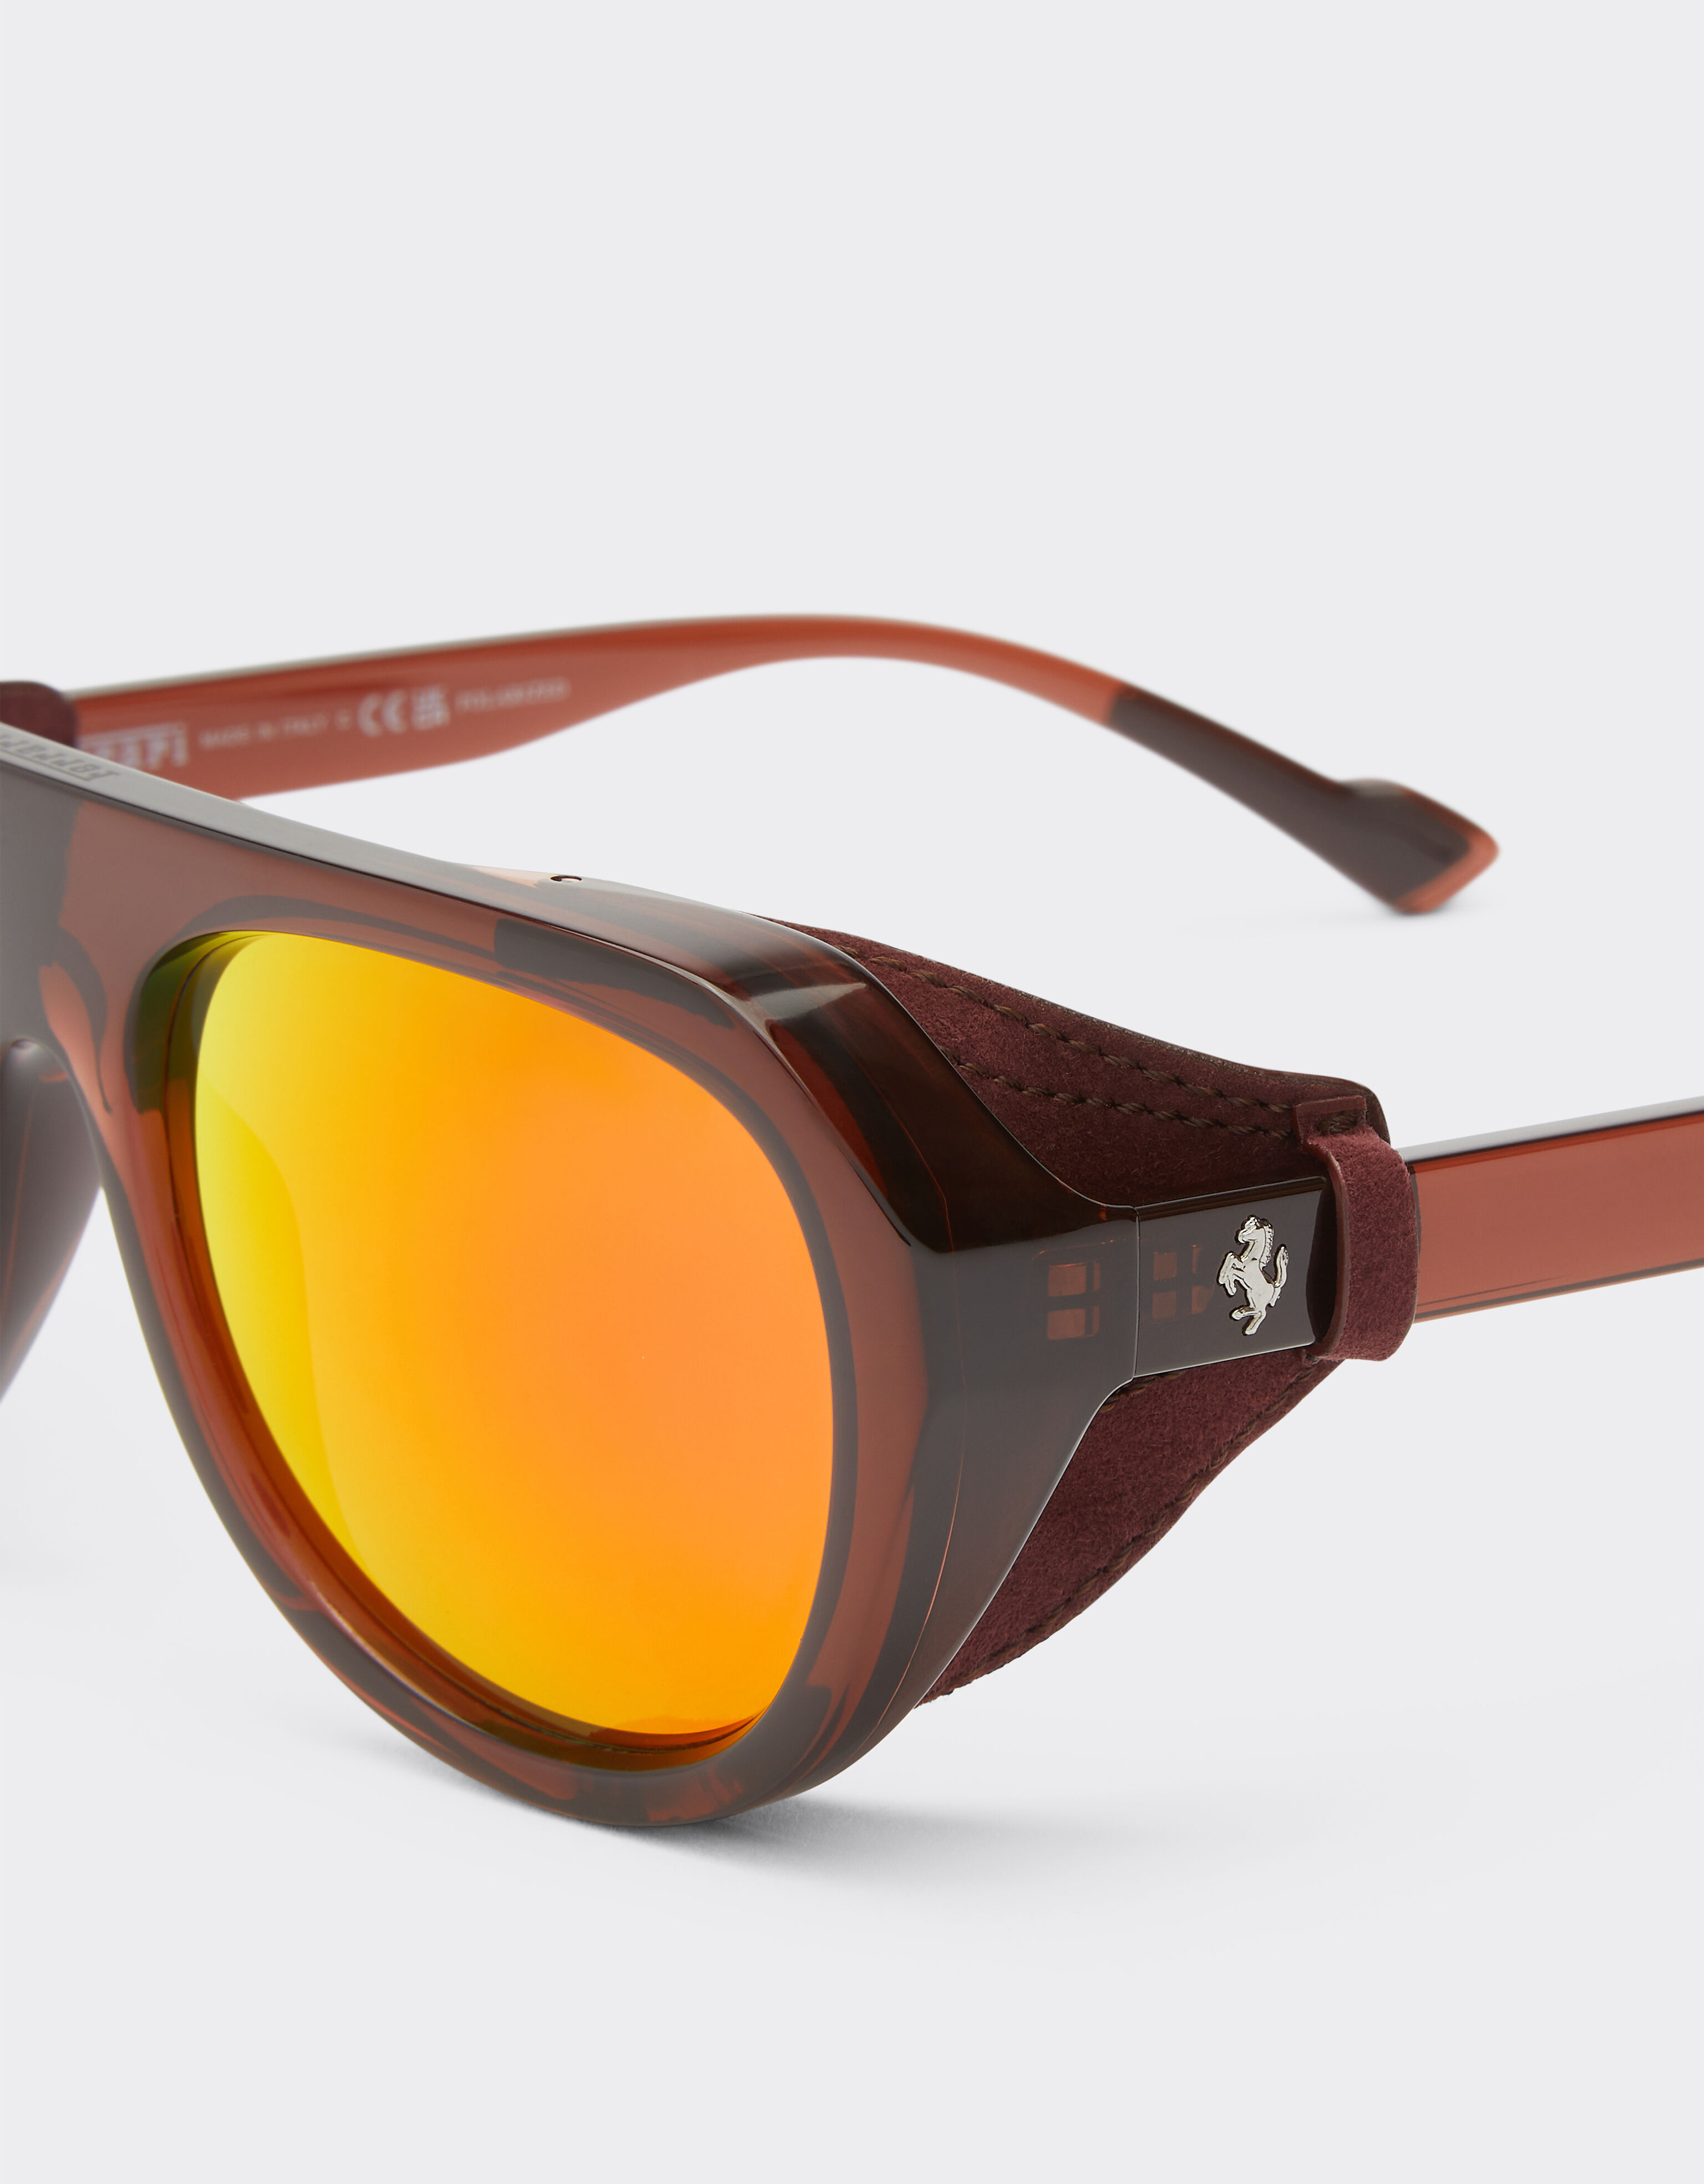 Ferrari Ferrari brown sunglasses with leather details and polarised mirror lenses Brown F1254f